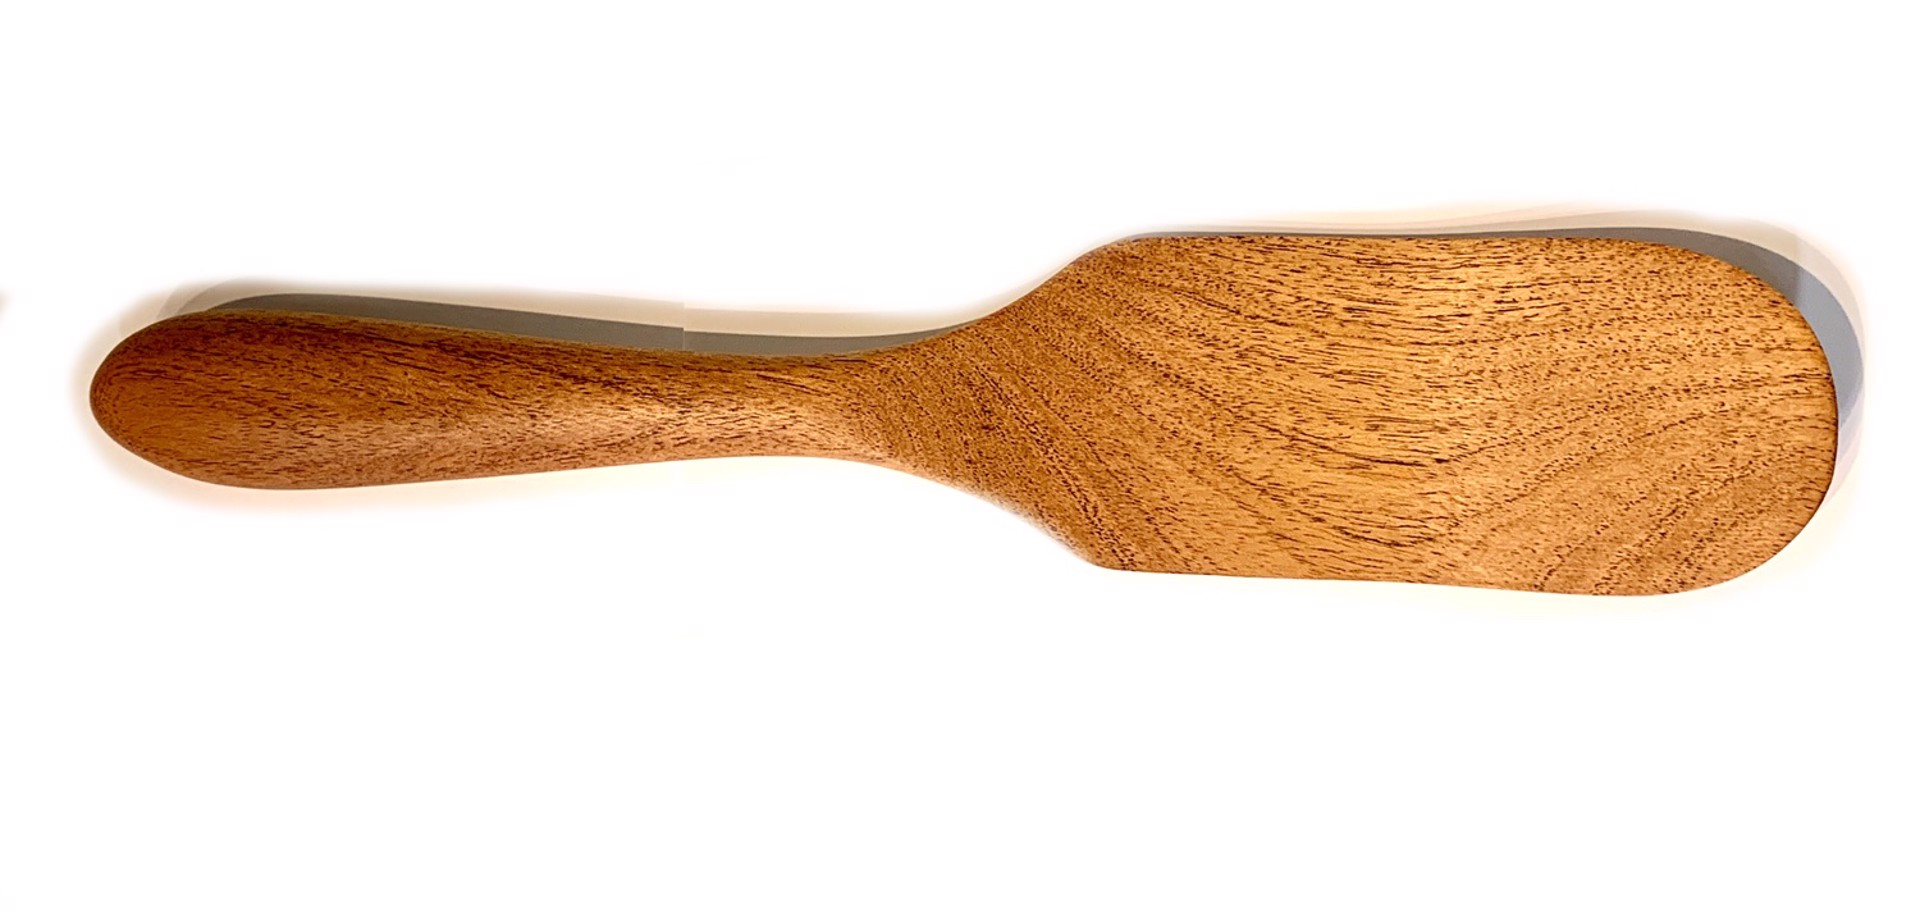 Utensil - Mesquite Paddle by TreeStump Woodcraft